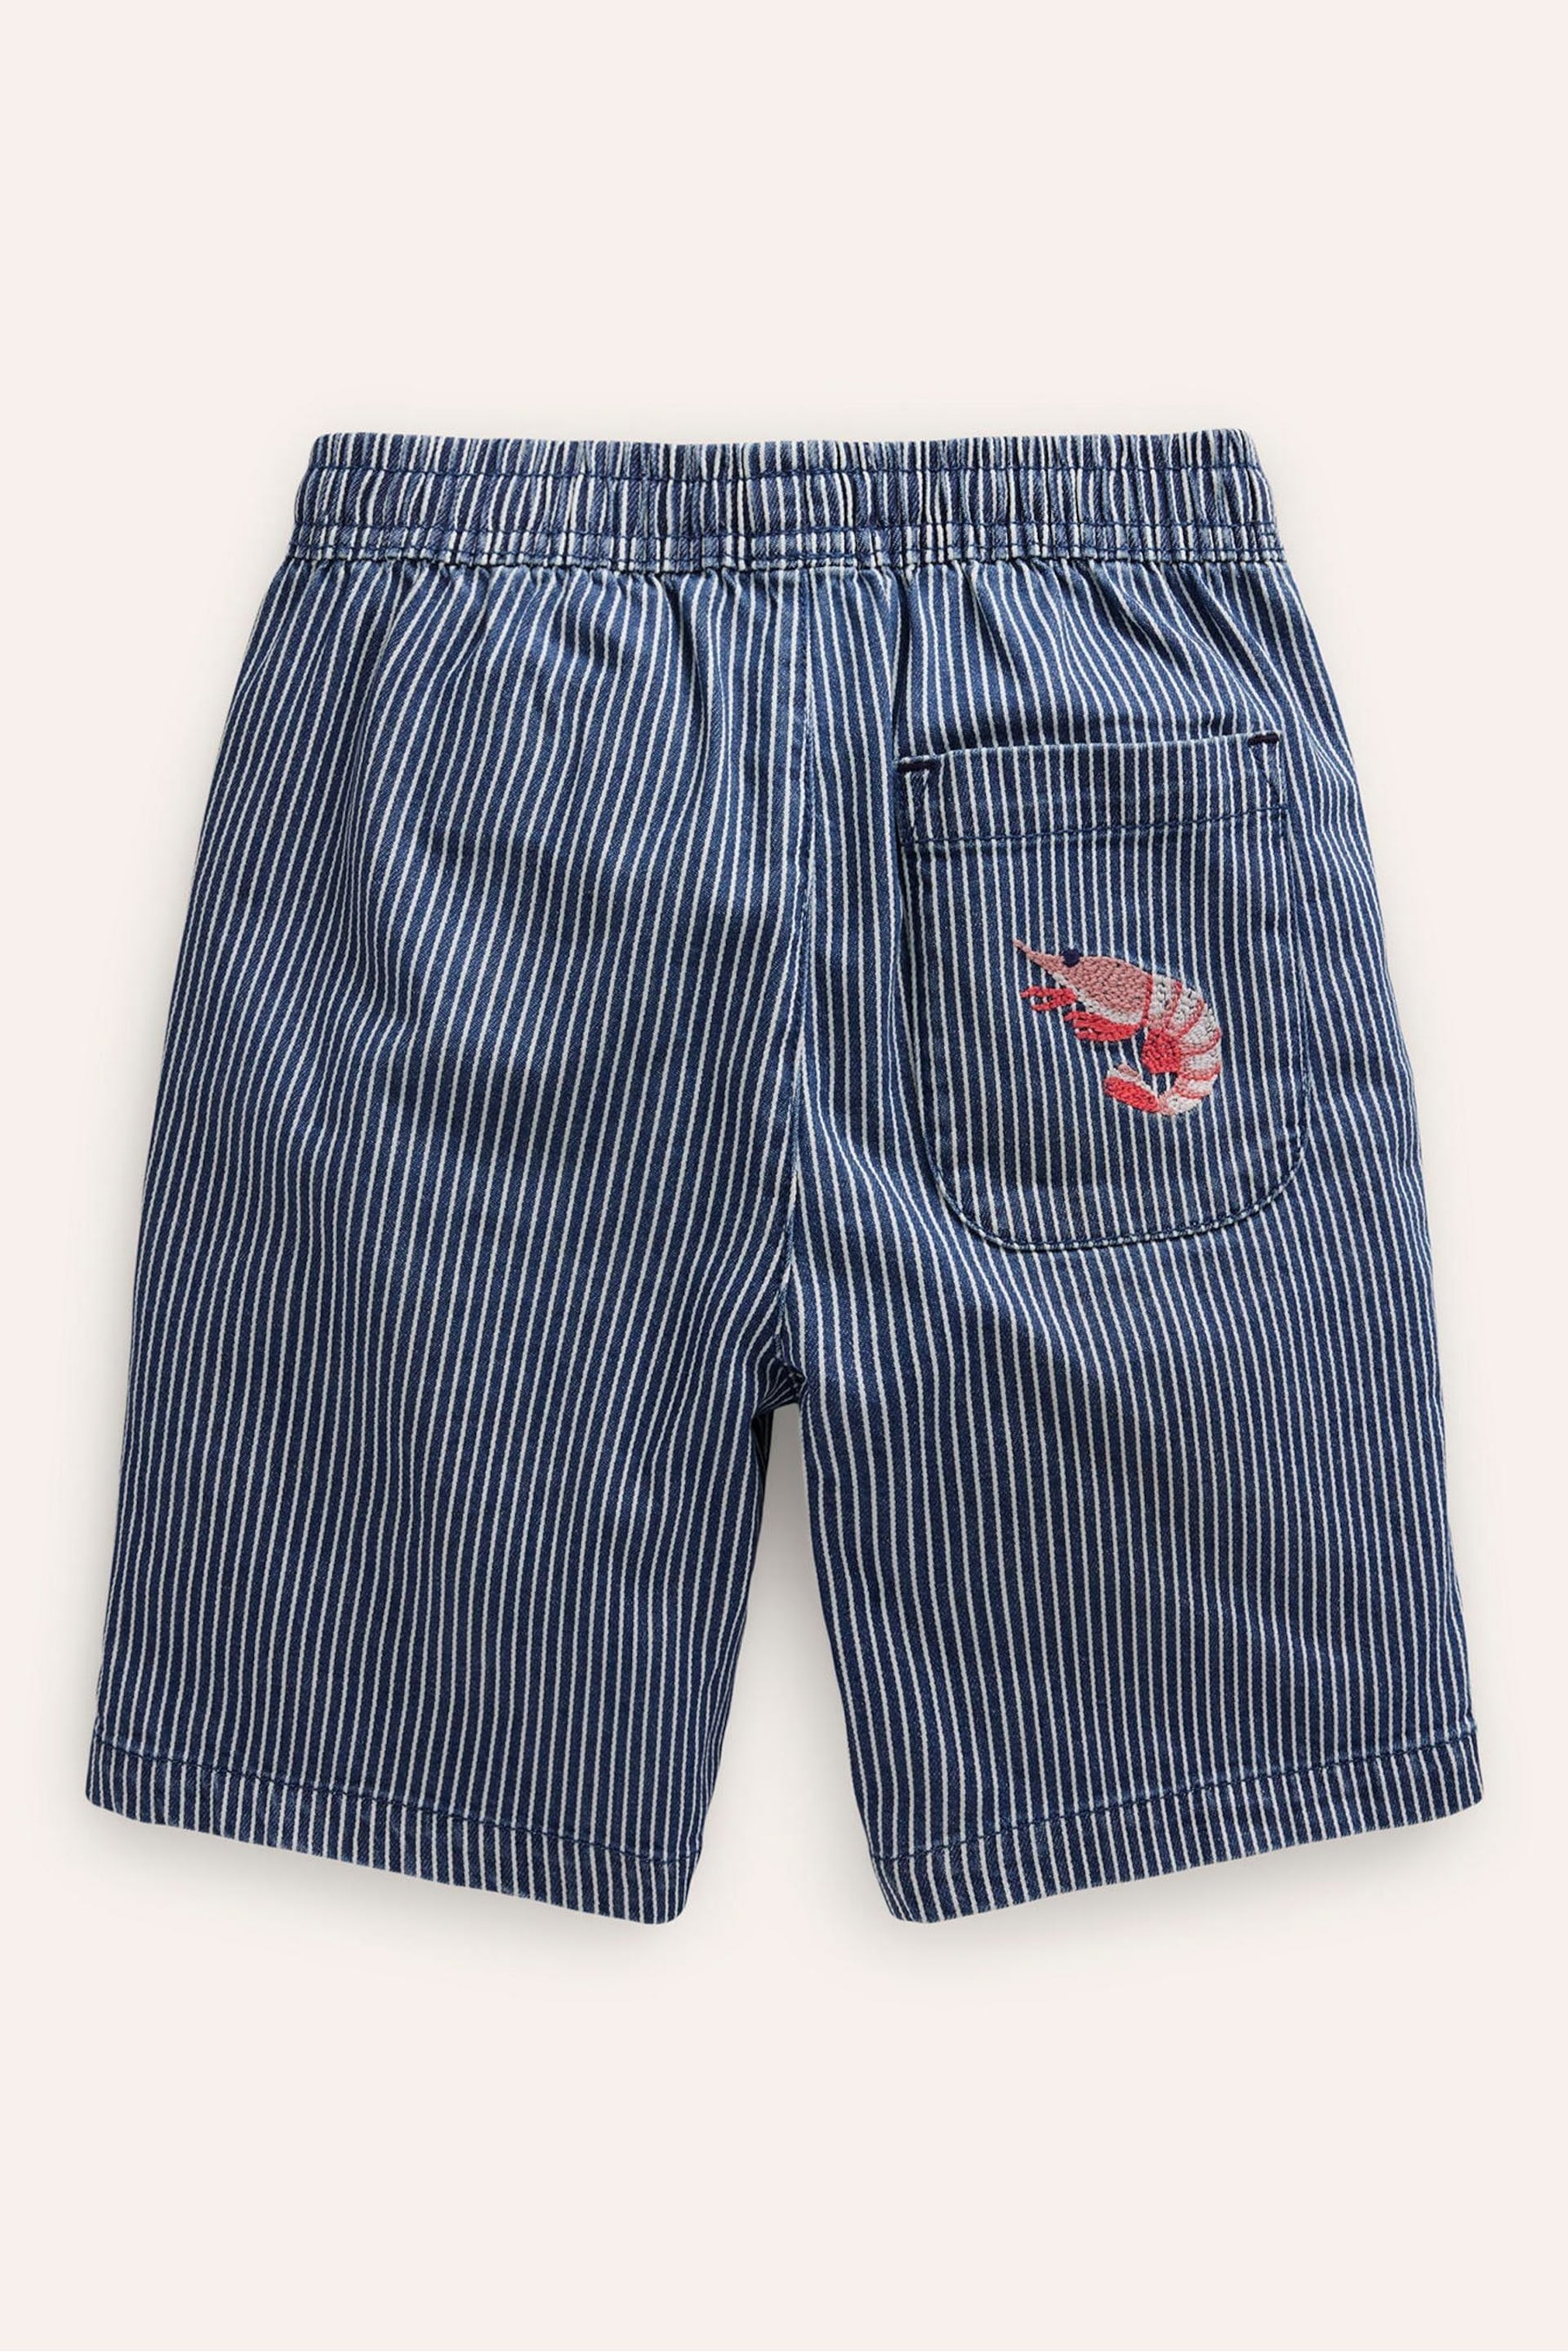 Boden Blue Superstitch Shorts - Image 2 of 3